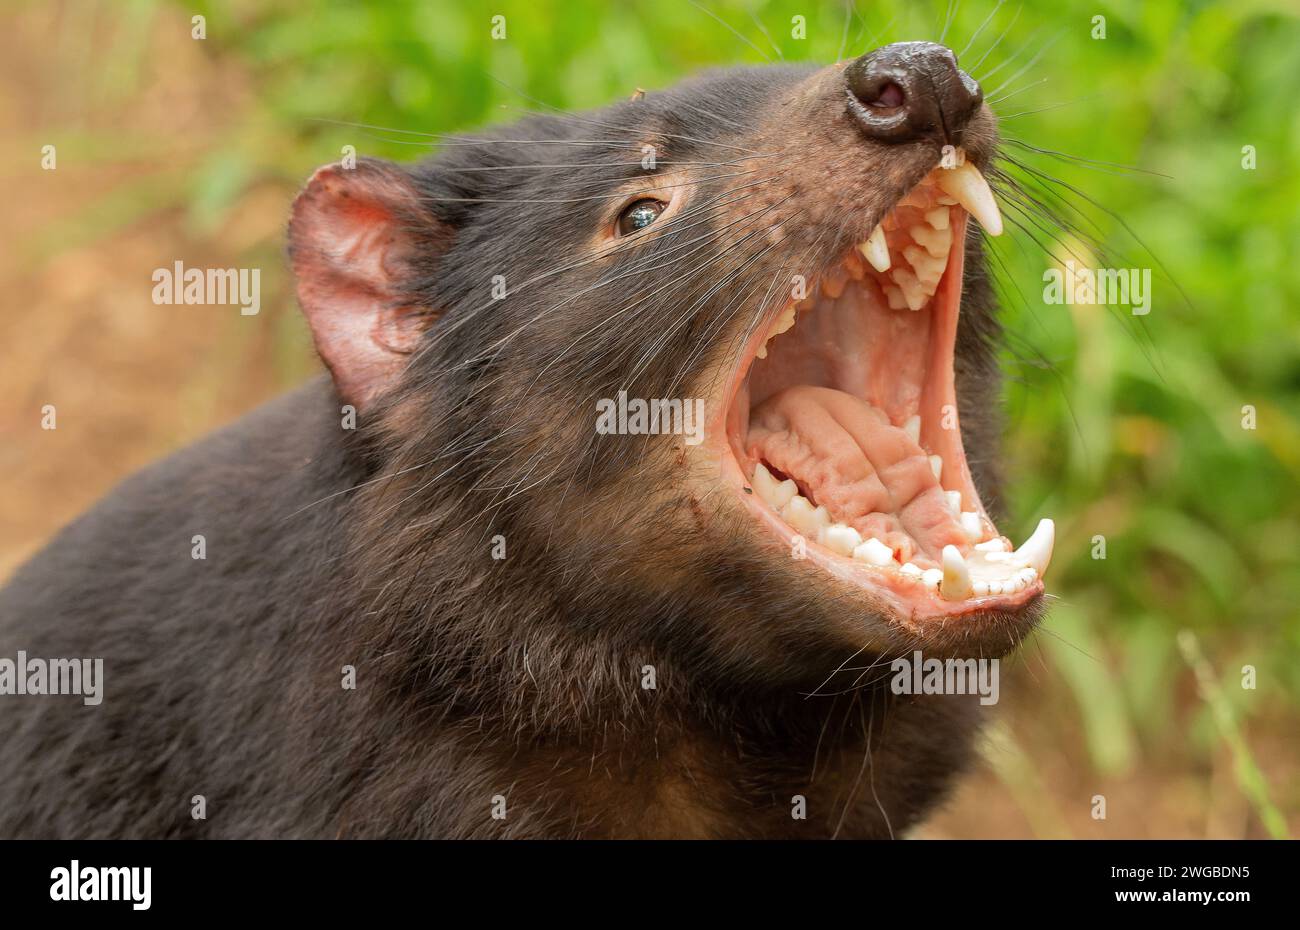 Tasmanian devil, Sarcophilus harrisii, yawning or baring its teeth. Tasmania. Stock Photo